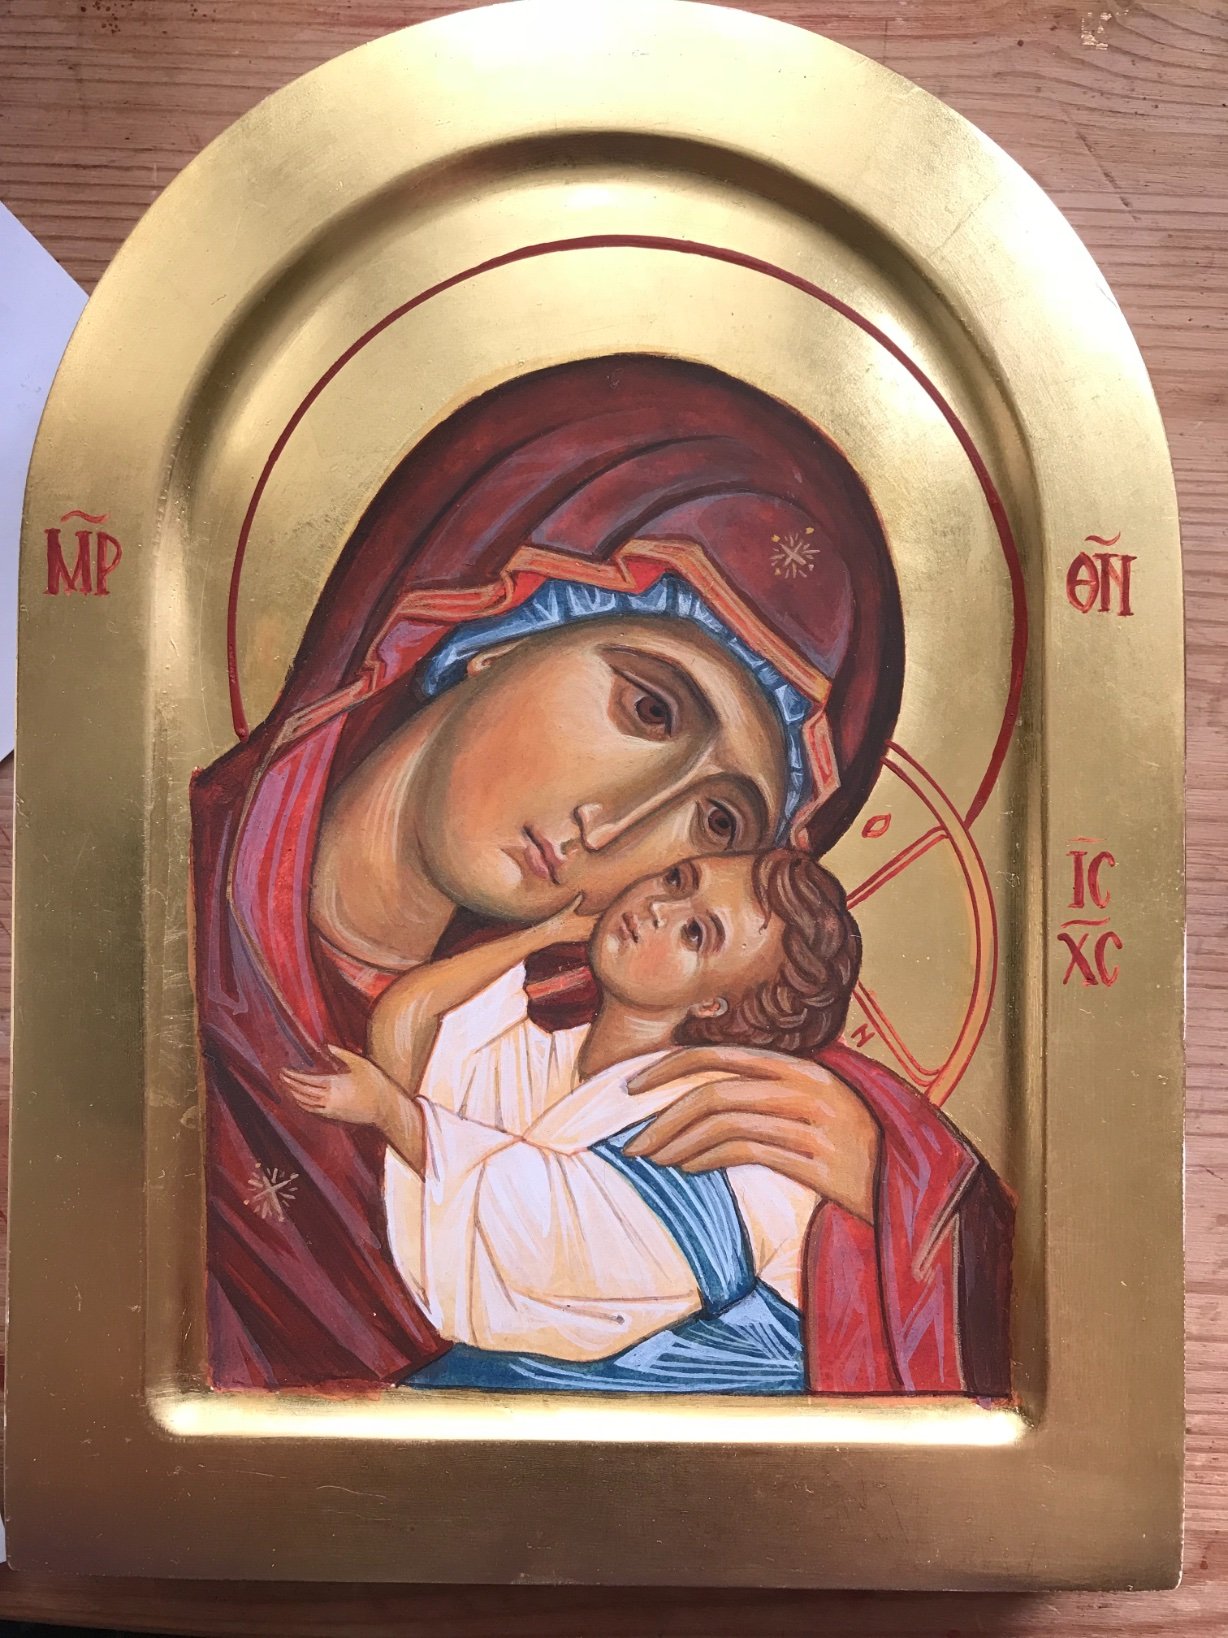 #edinburgh #Artist #Iconographer in #Orthodox Church. Commissions, tempera #gold #icons #prints - https://t.co/BMOdu4jT3r